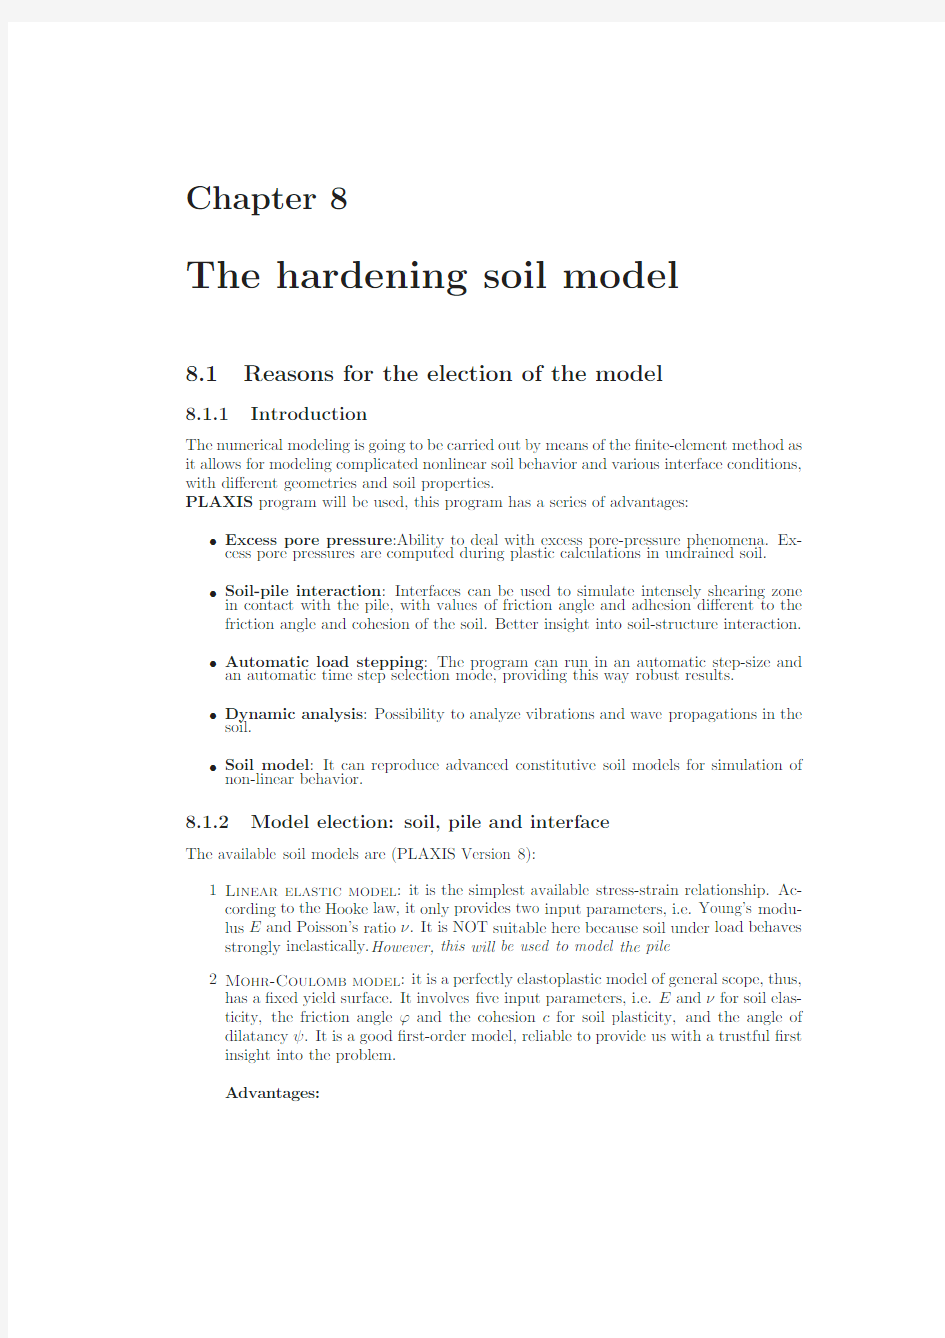 Hardening soil模型简介(Plaxis)